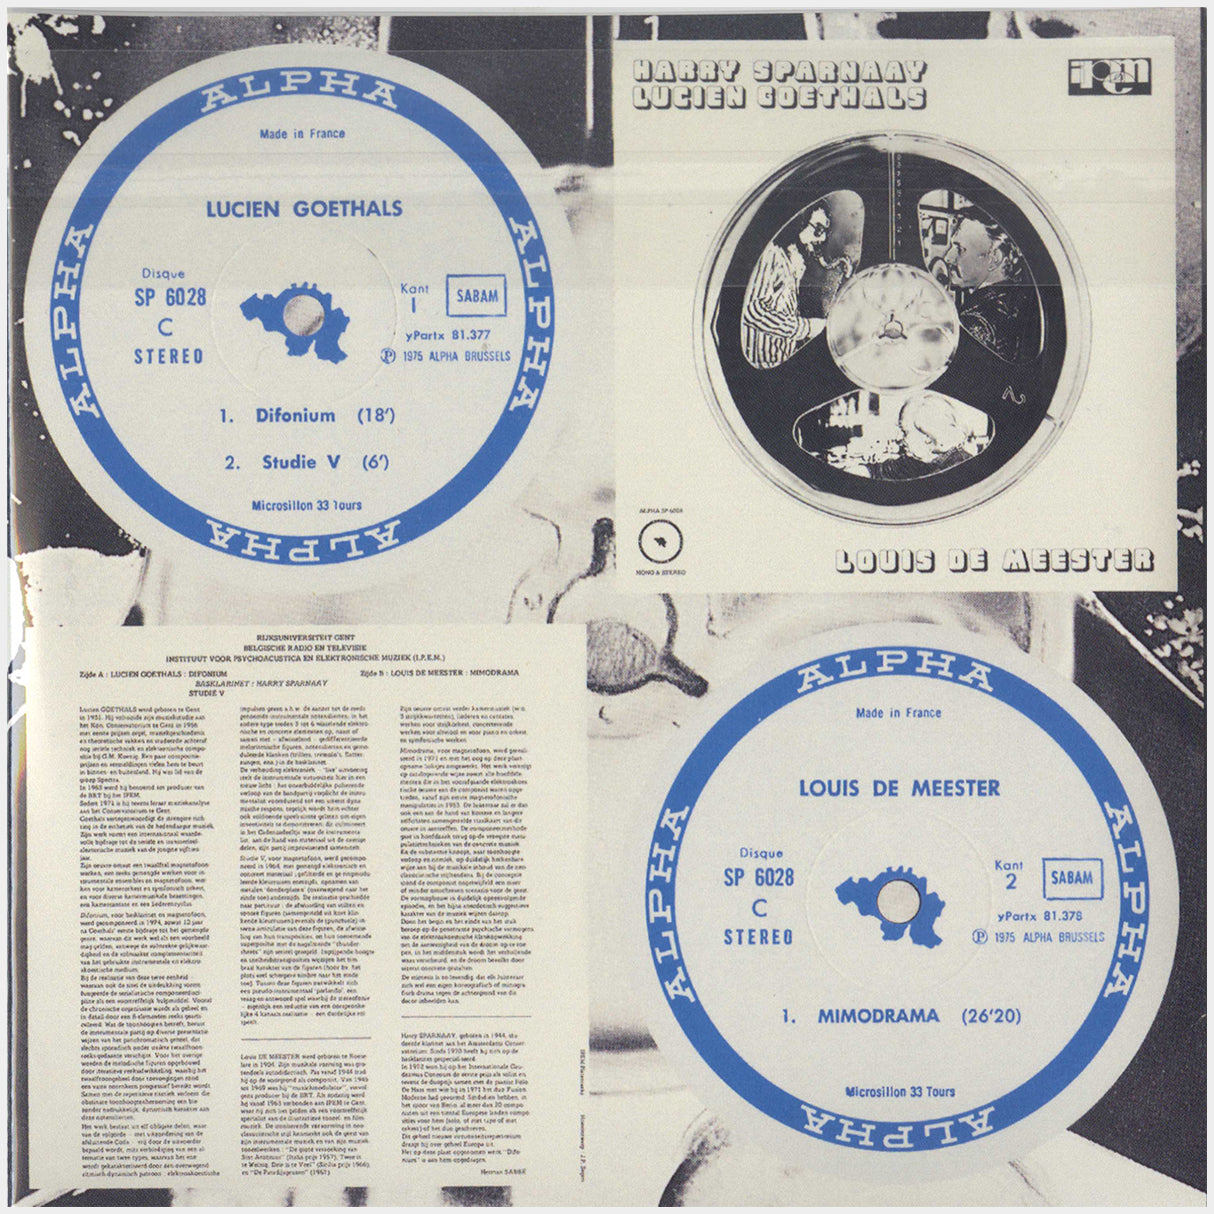 [CP 053-085-138 CD] IPEM 1963-73, I.P.E.M., Elektronische Produktie Van I.P.E.M.